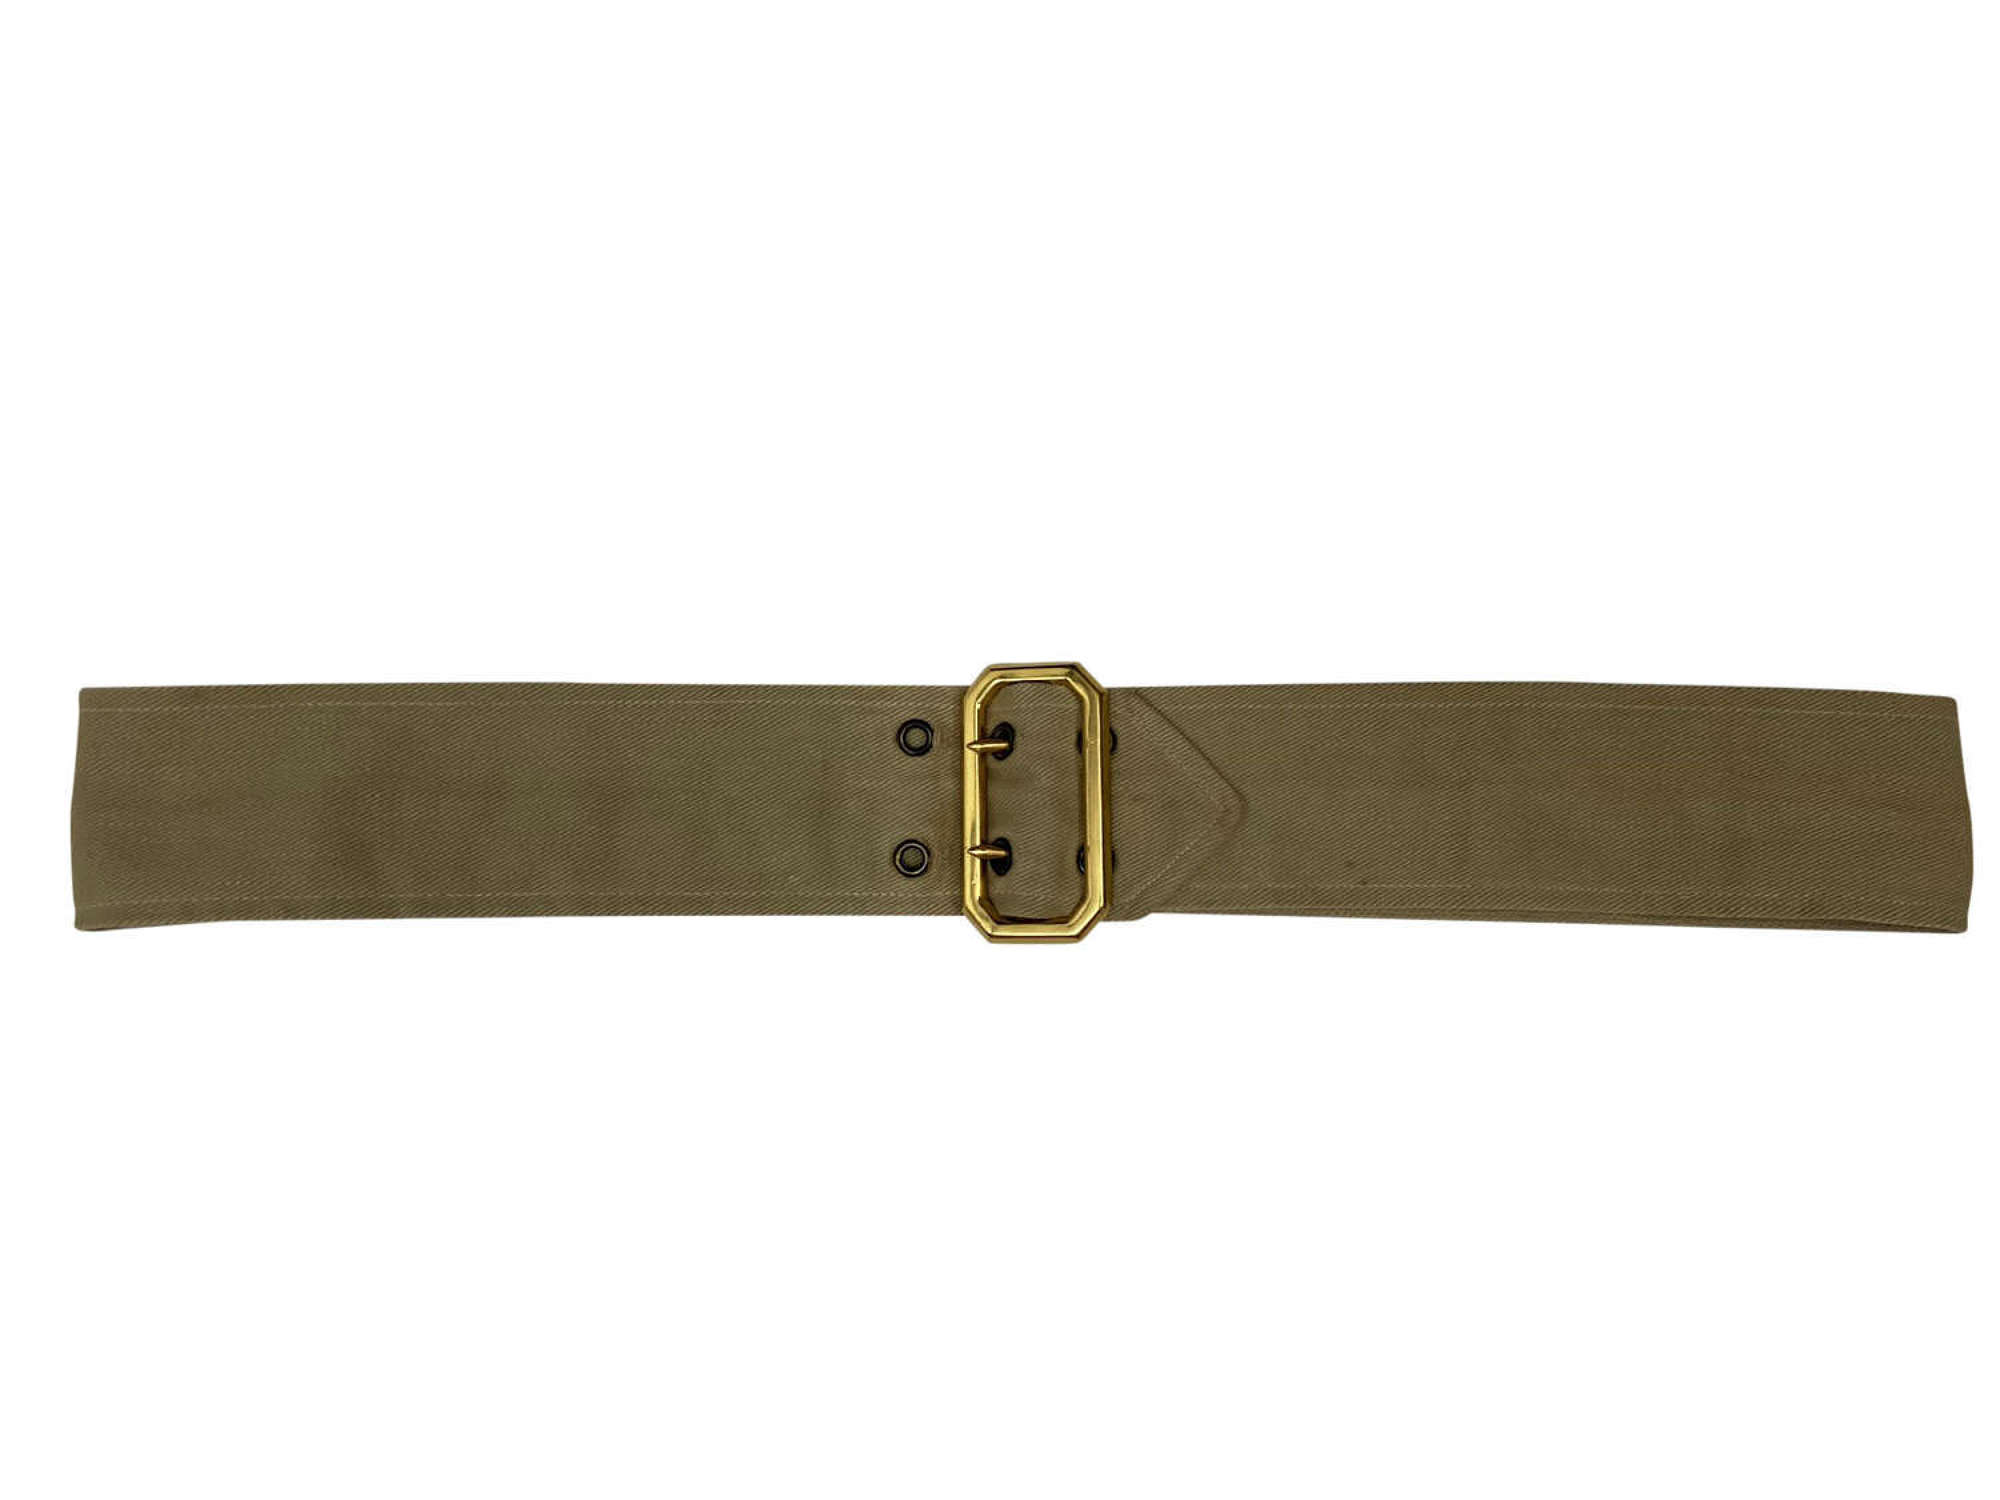 Original RAAF Tunic Belt & Buckle